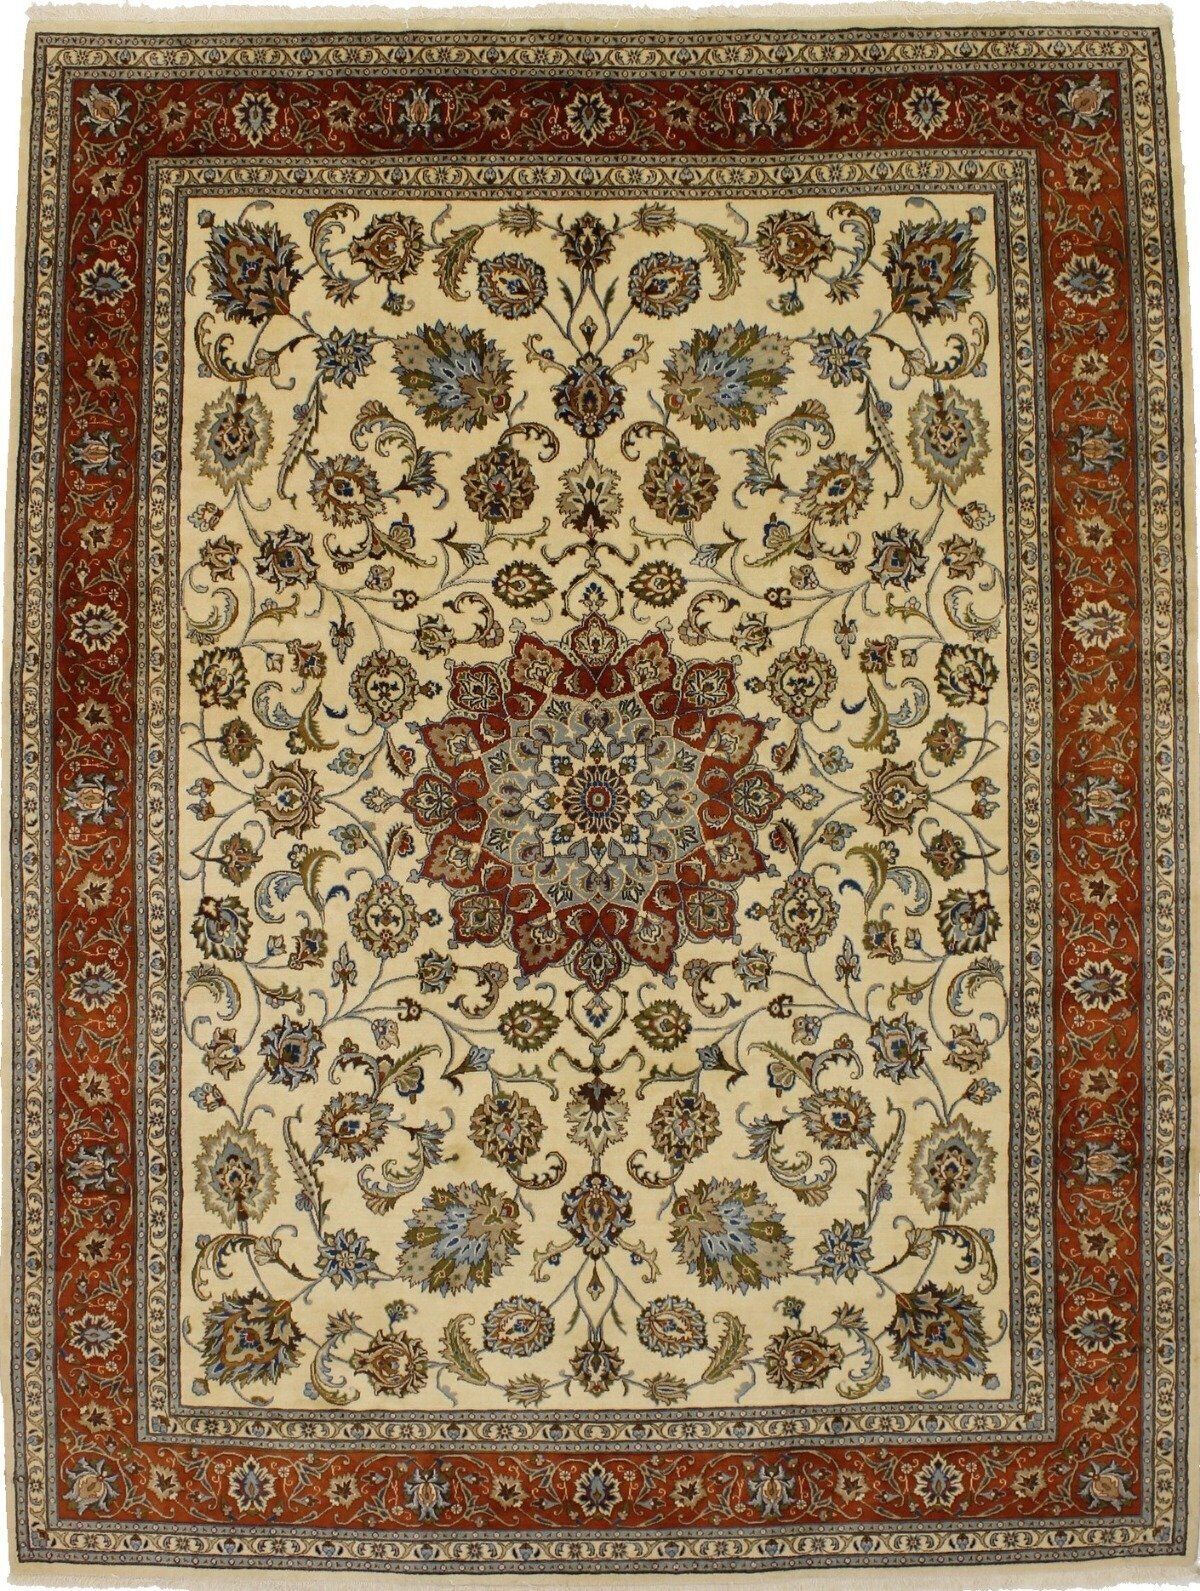 Rare Vintage Classic Floral Medallion Design 10X13 Oriental Rug Decor Carpet